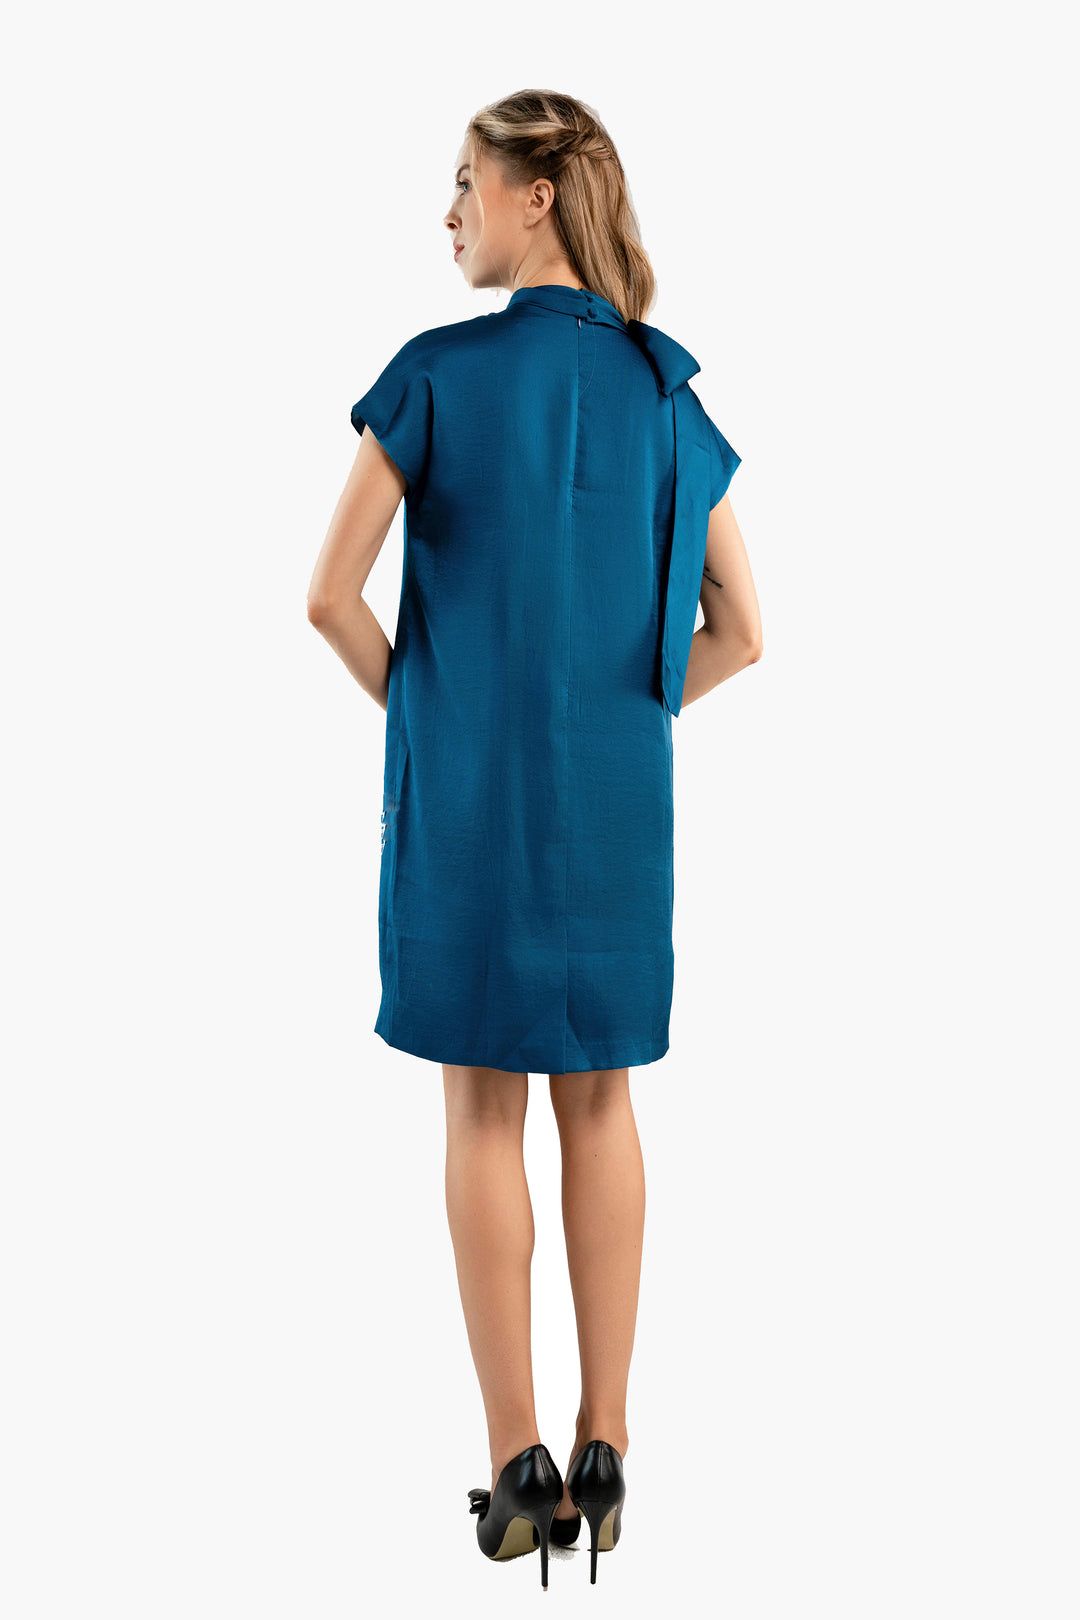 Blue satin shift dress with bow on shoulder